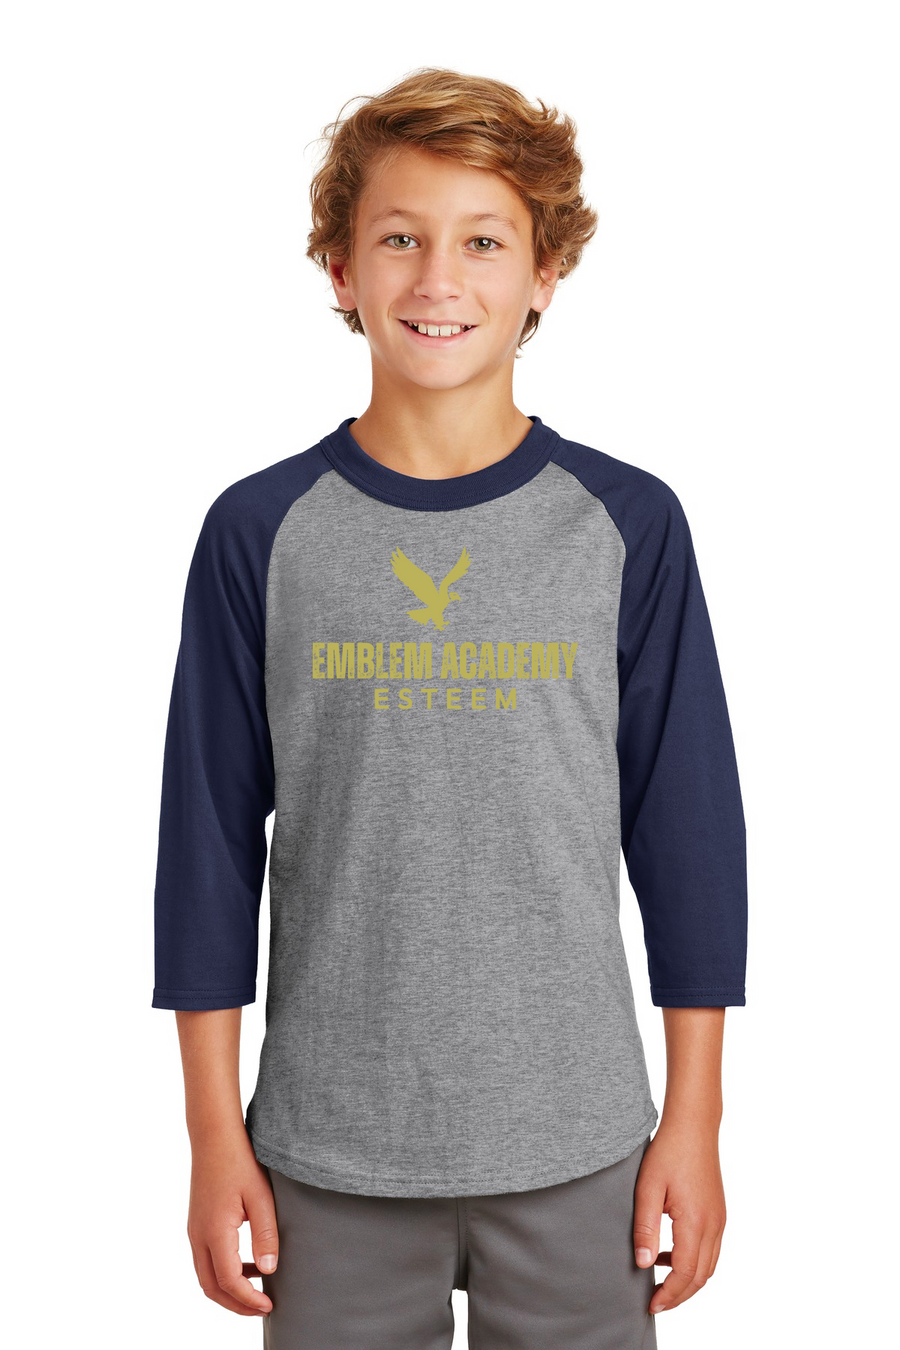 Emblem Academy Spirit Wear 2023/24 On-Demand-Unisex Baseball Tee Esteem Logo